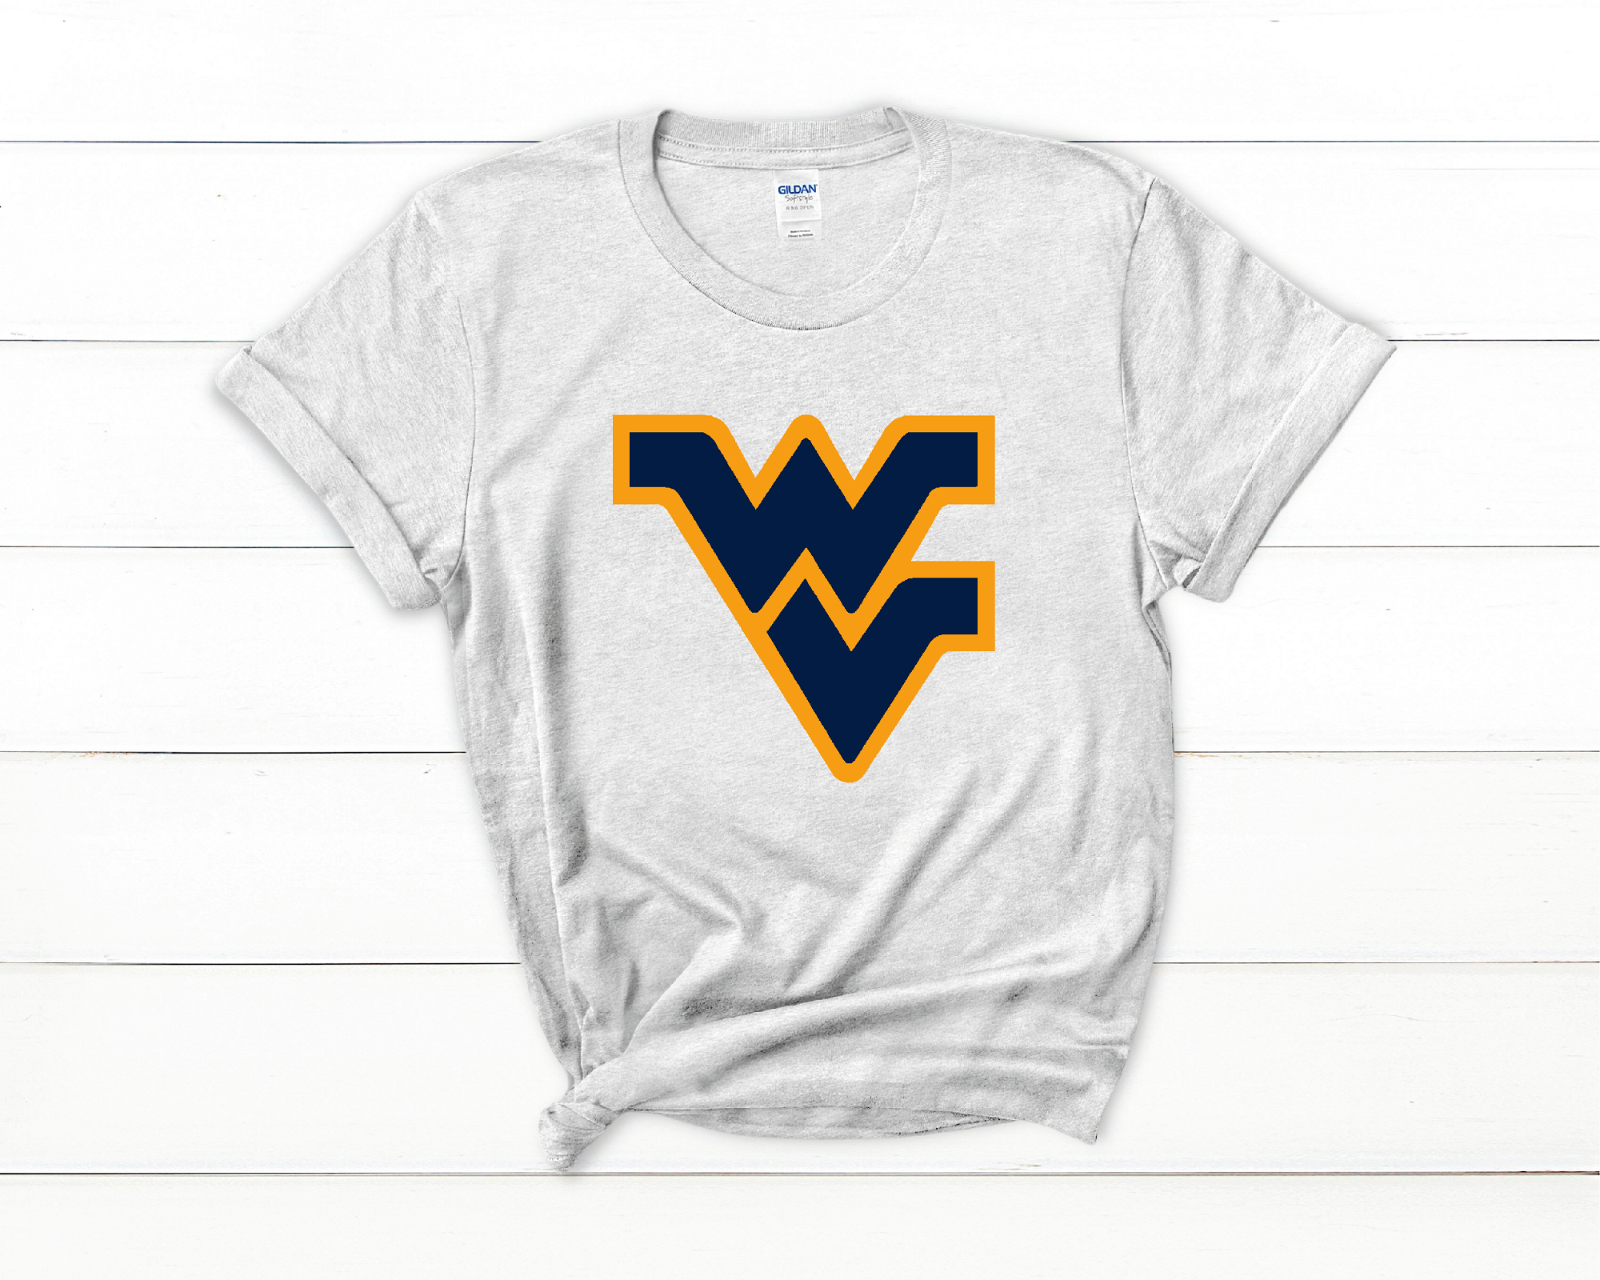 WV T-Shirt - $16.99 - $17.99